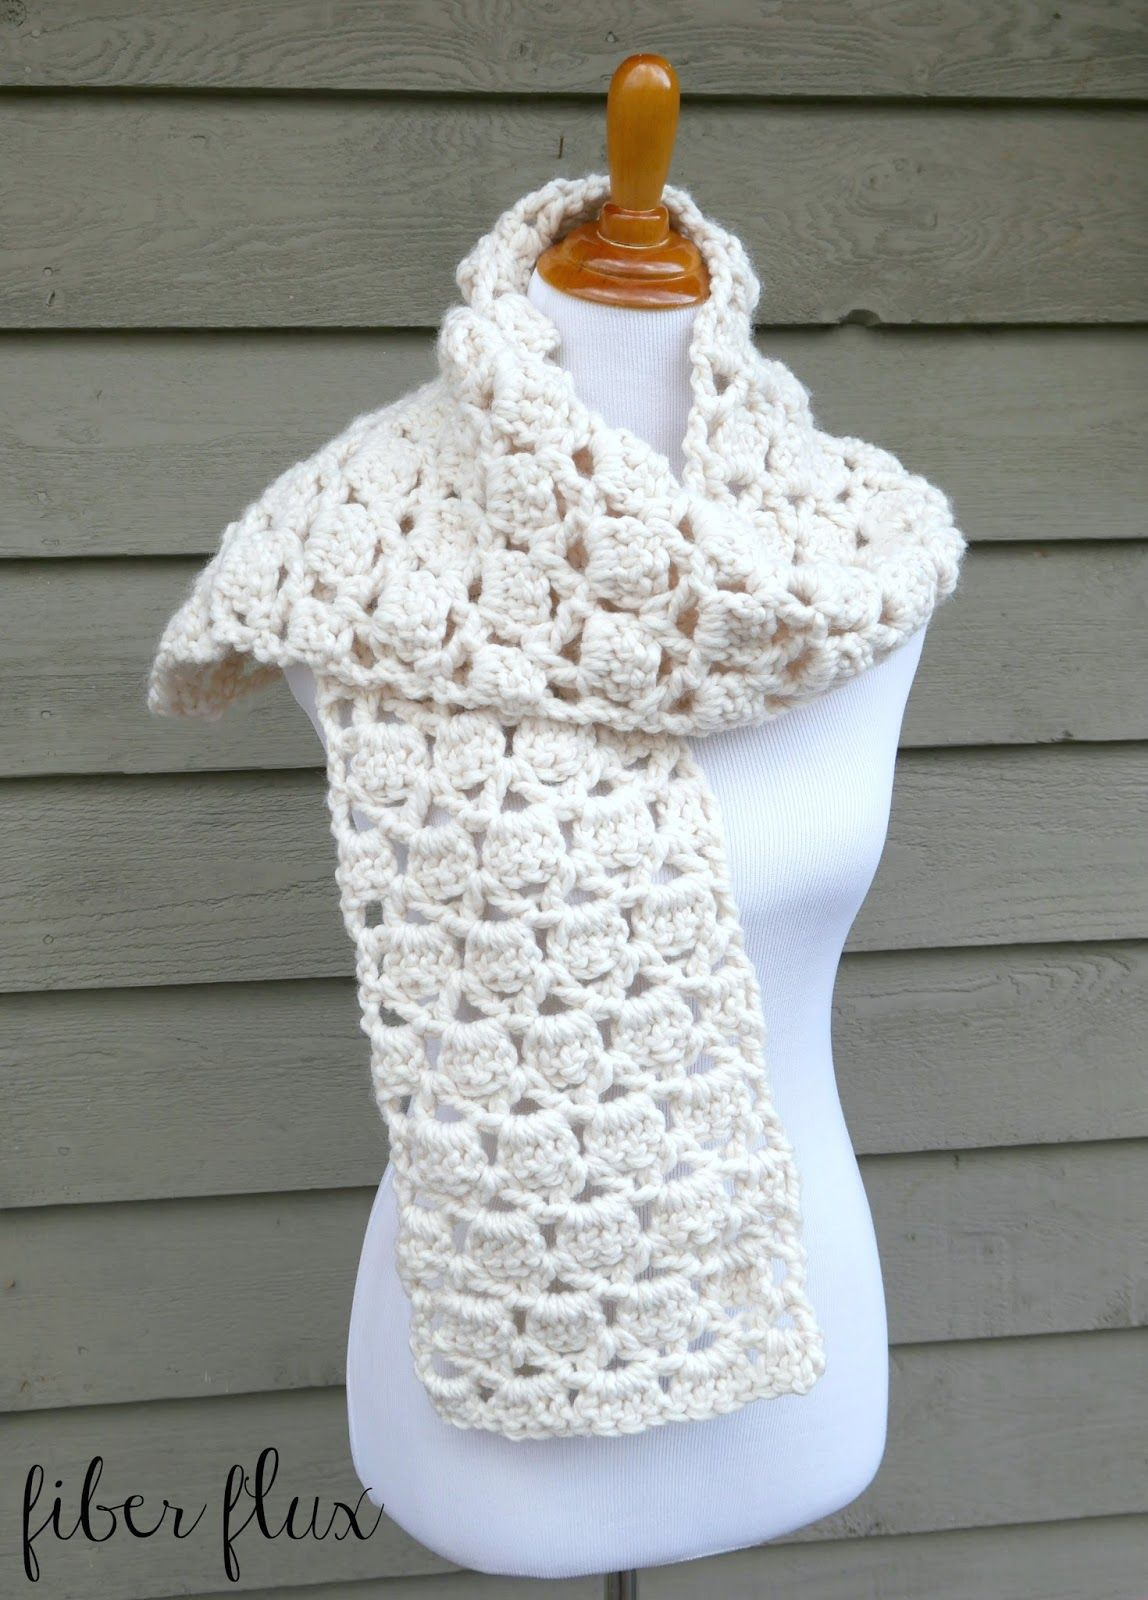 Super Bulky Yarn Crochet Scarf Pattern Free Crochet Patternsugar Cookie Scarf Shawl W Sleeves